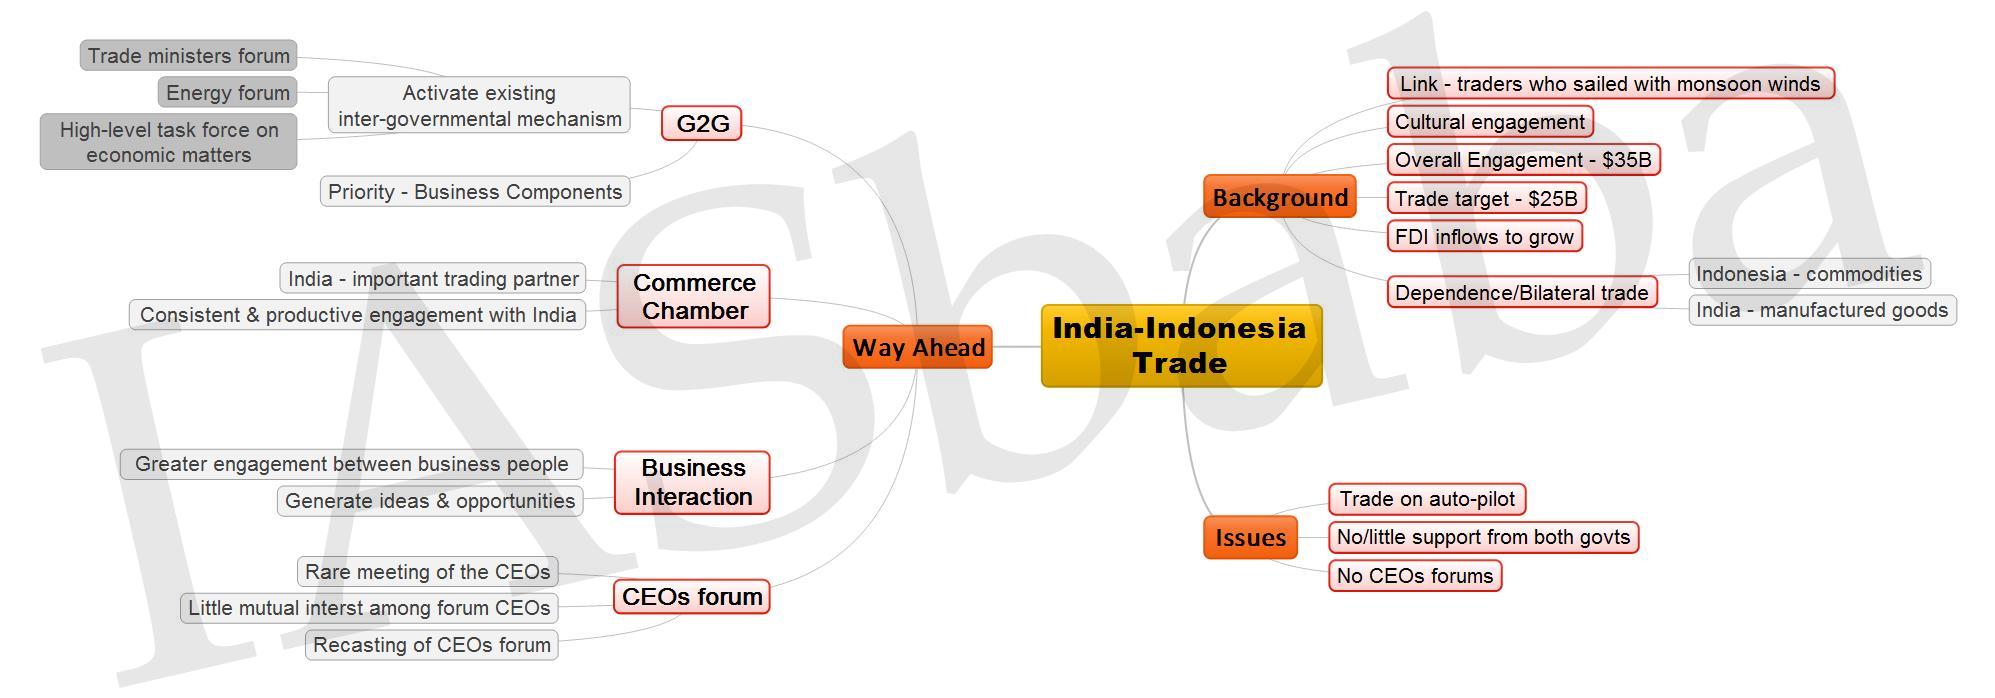 IndiaIndonesia Trade.jpg JPG